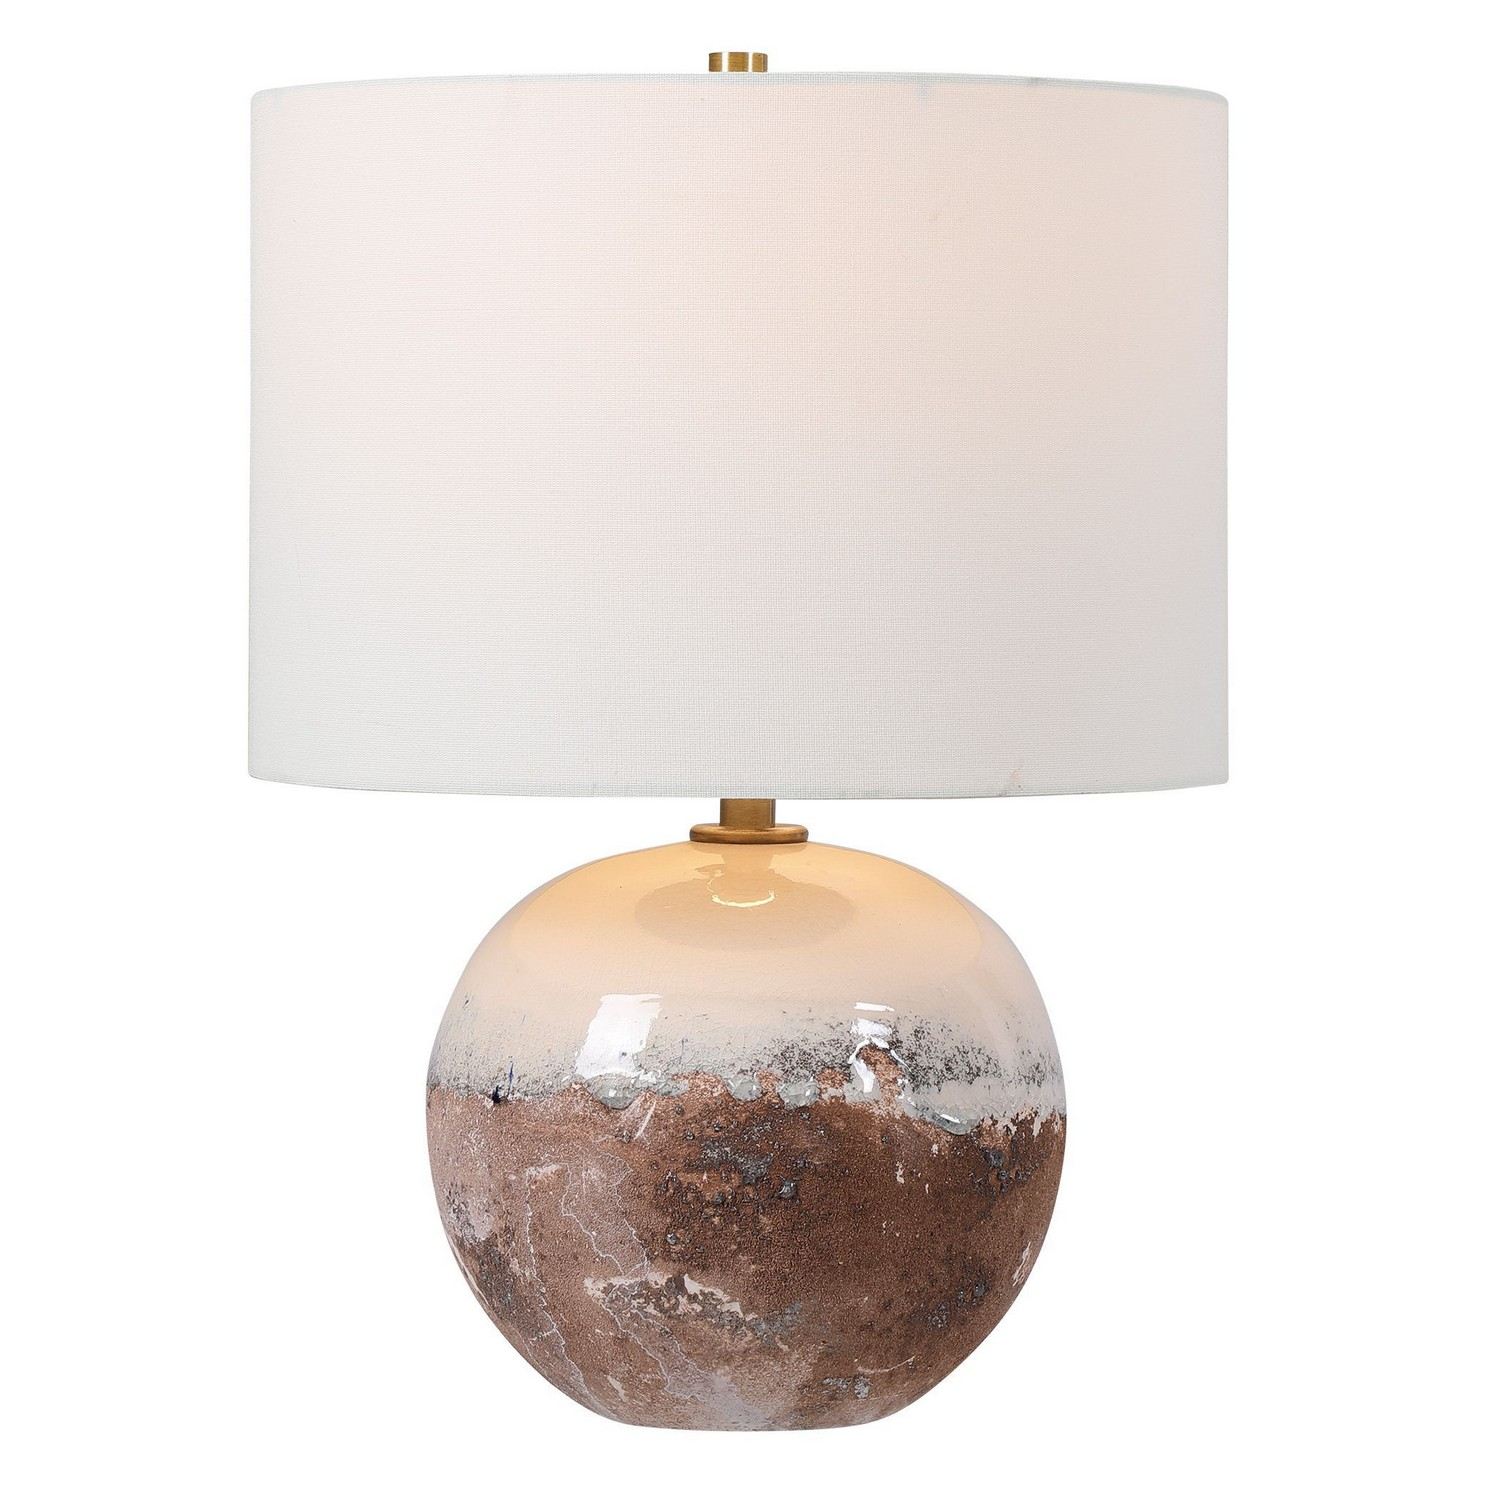 Uttermost Durango Accent Lamp - Terracotta